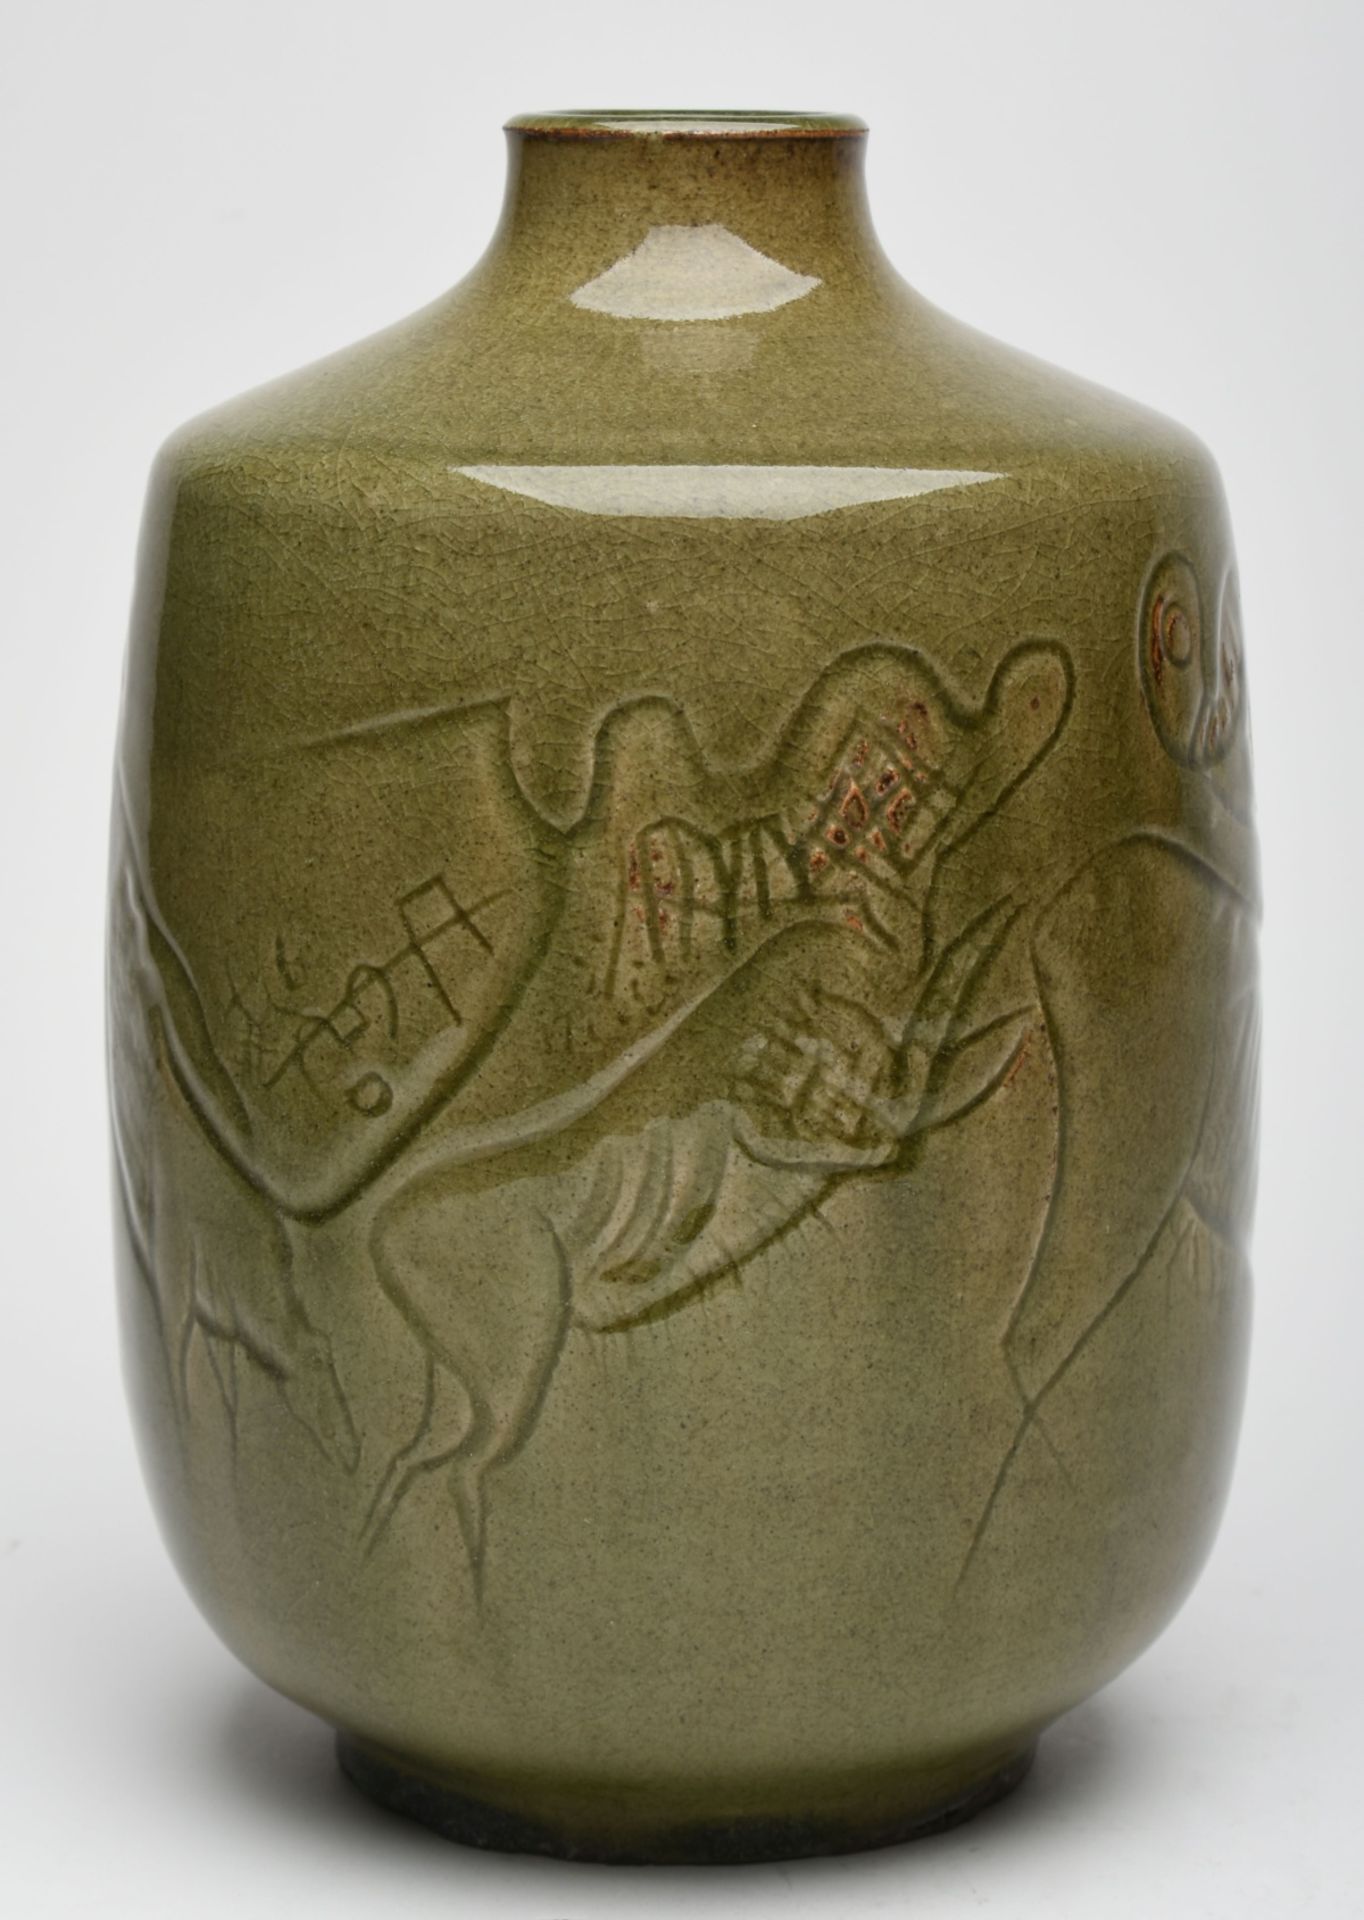 Uyanik, Mehmet (1946 Konya - tätig in Bergkamen) Keramikvase, gebauchte Ausformung mit - Bild 3 aus 3